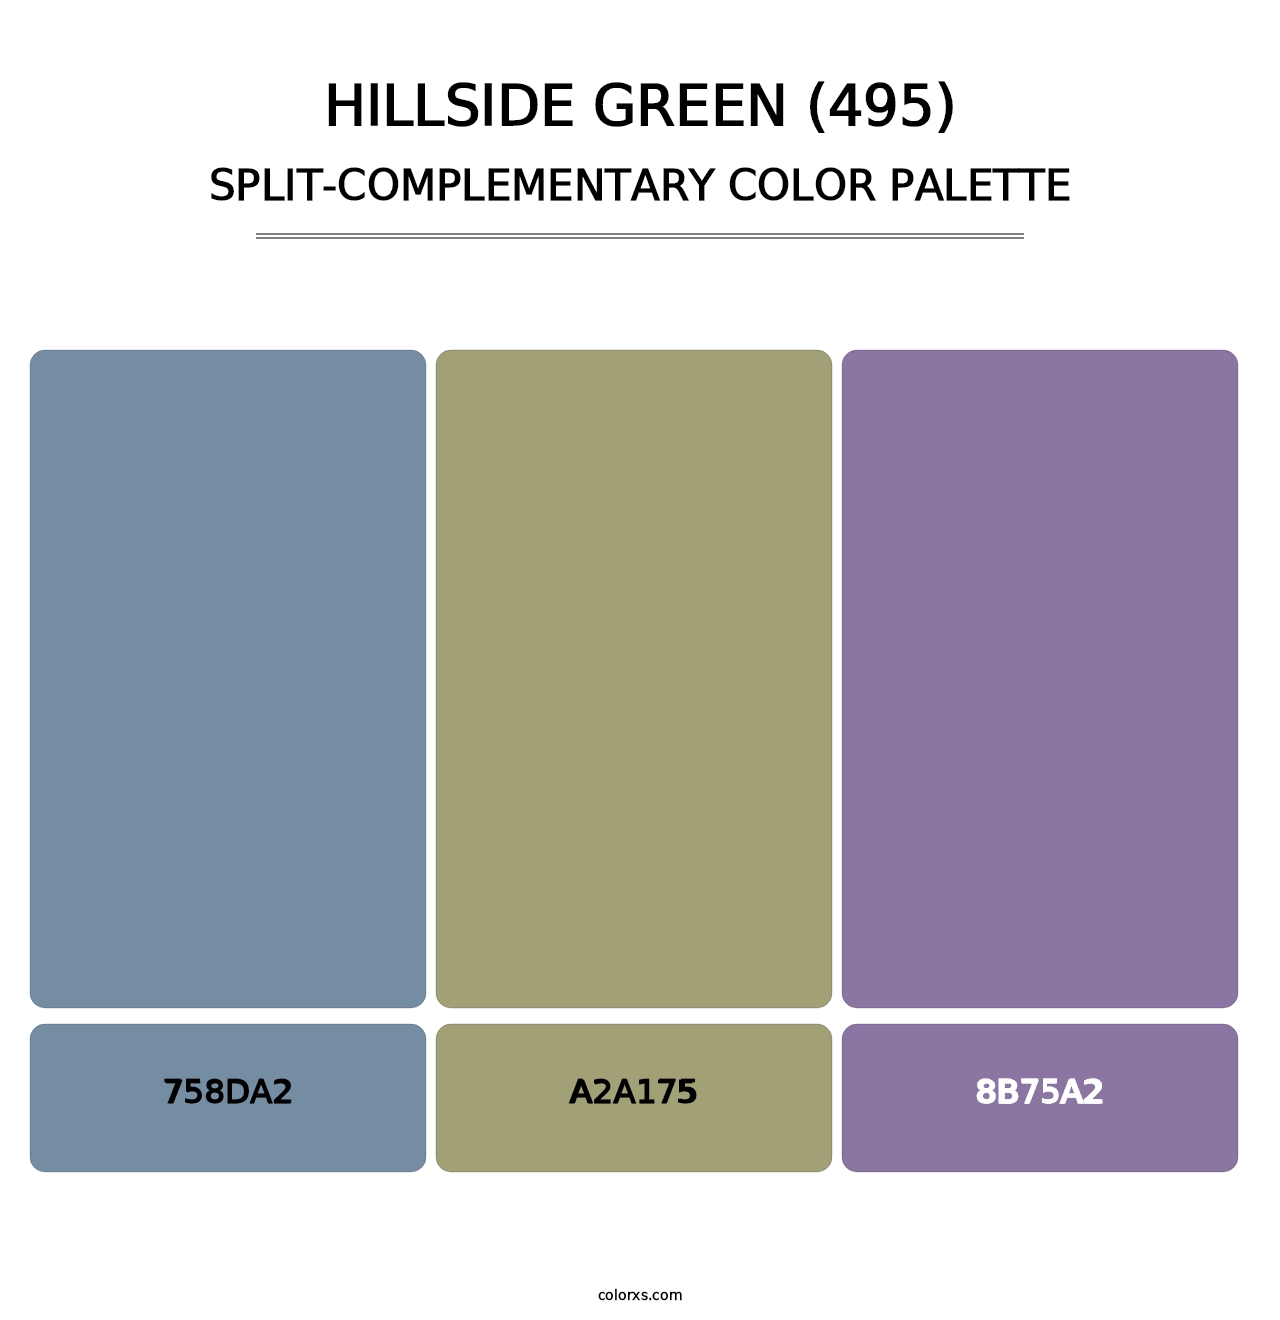 Hillside Green (495) - Split-Complementary Color Palette